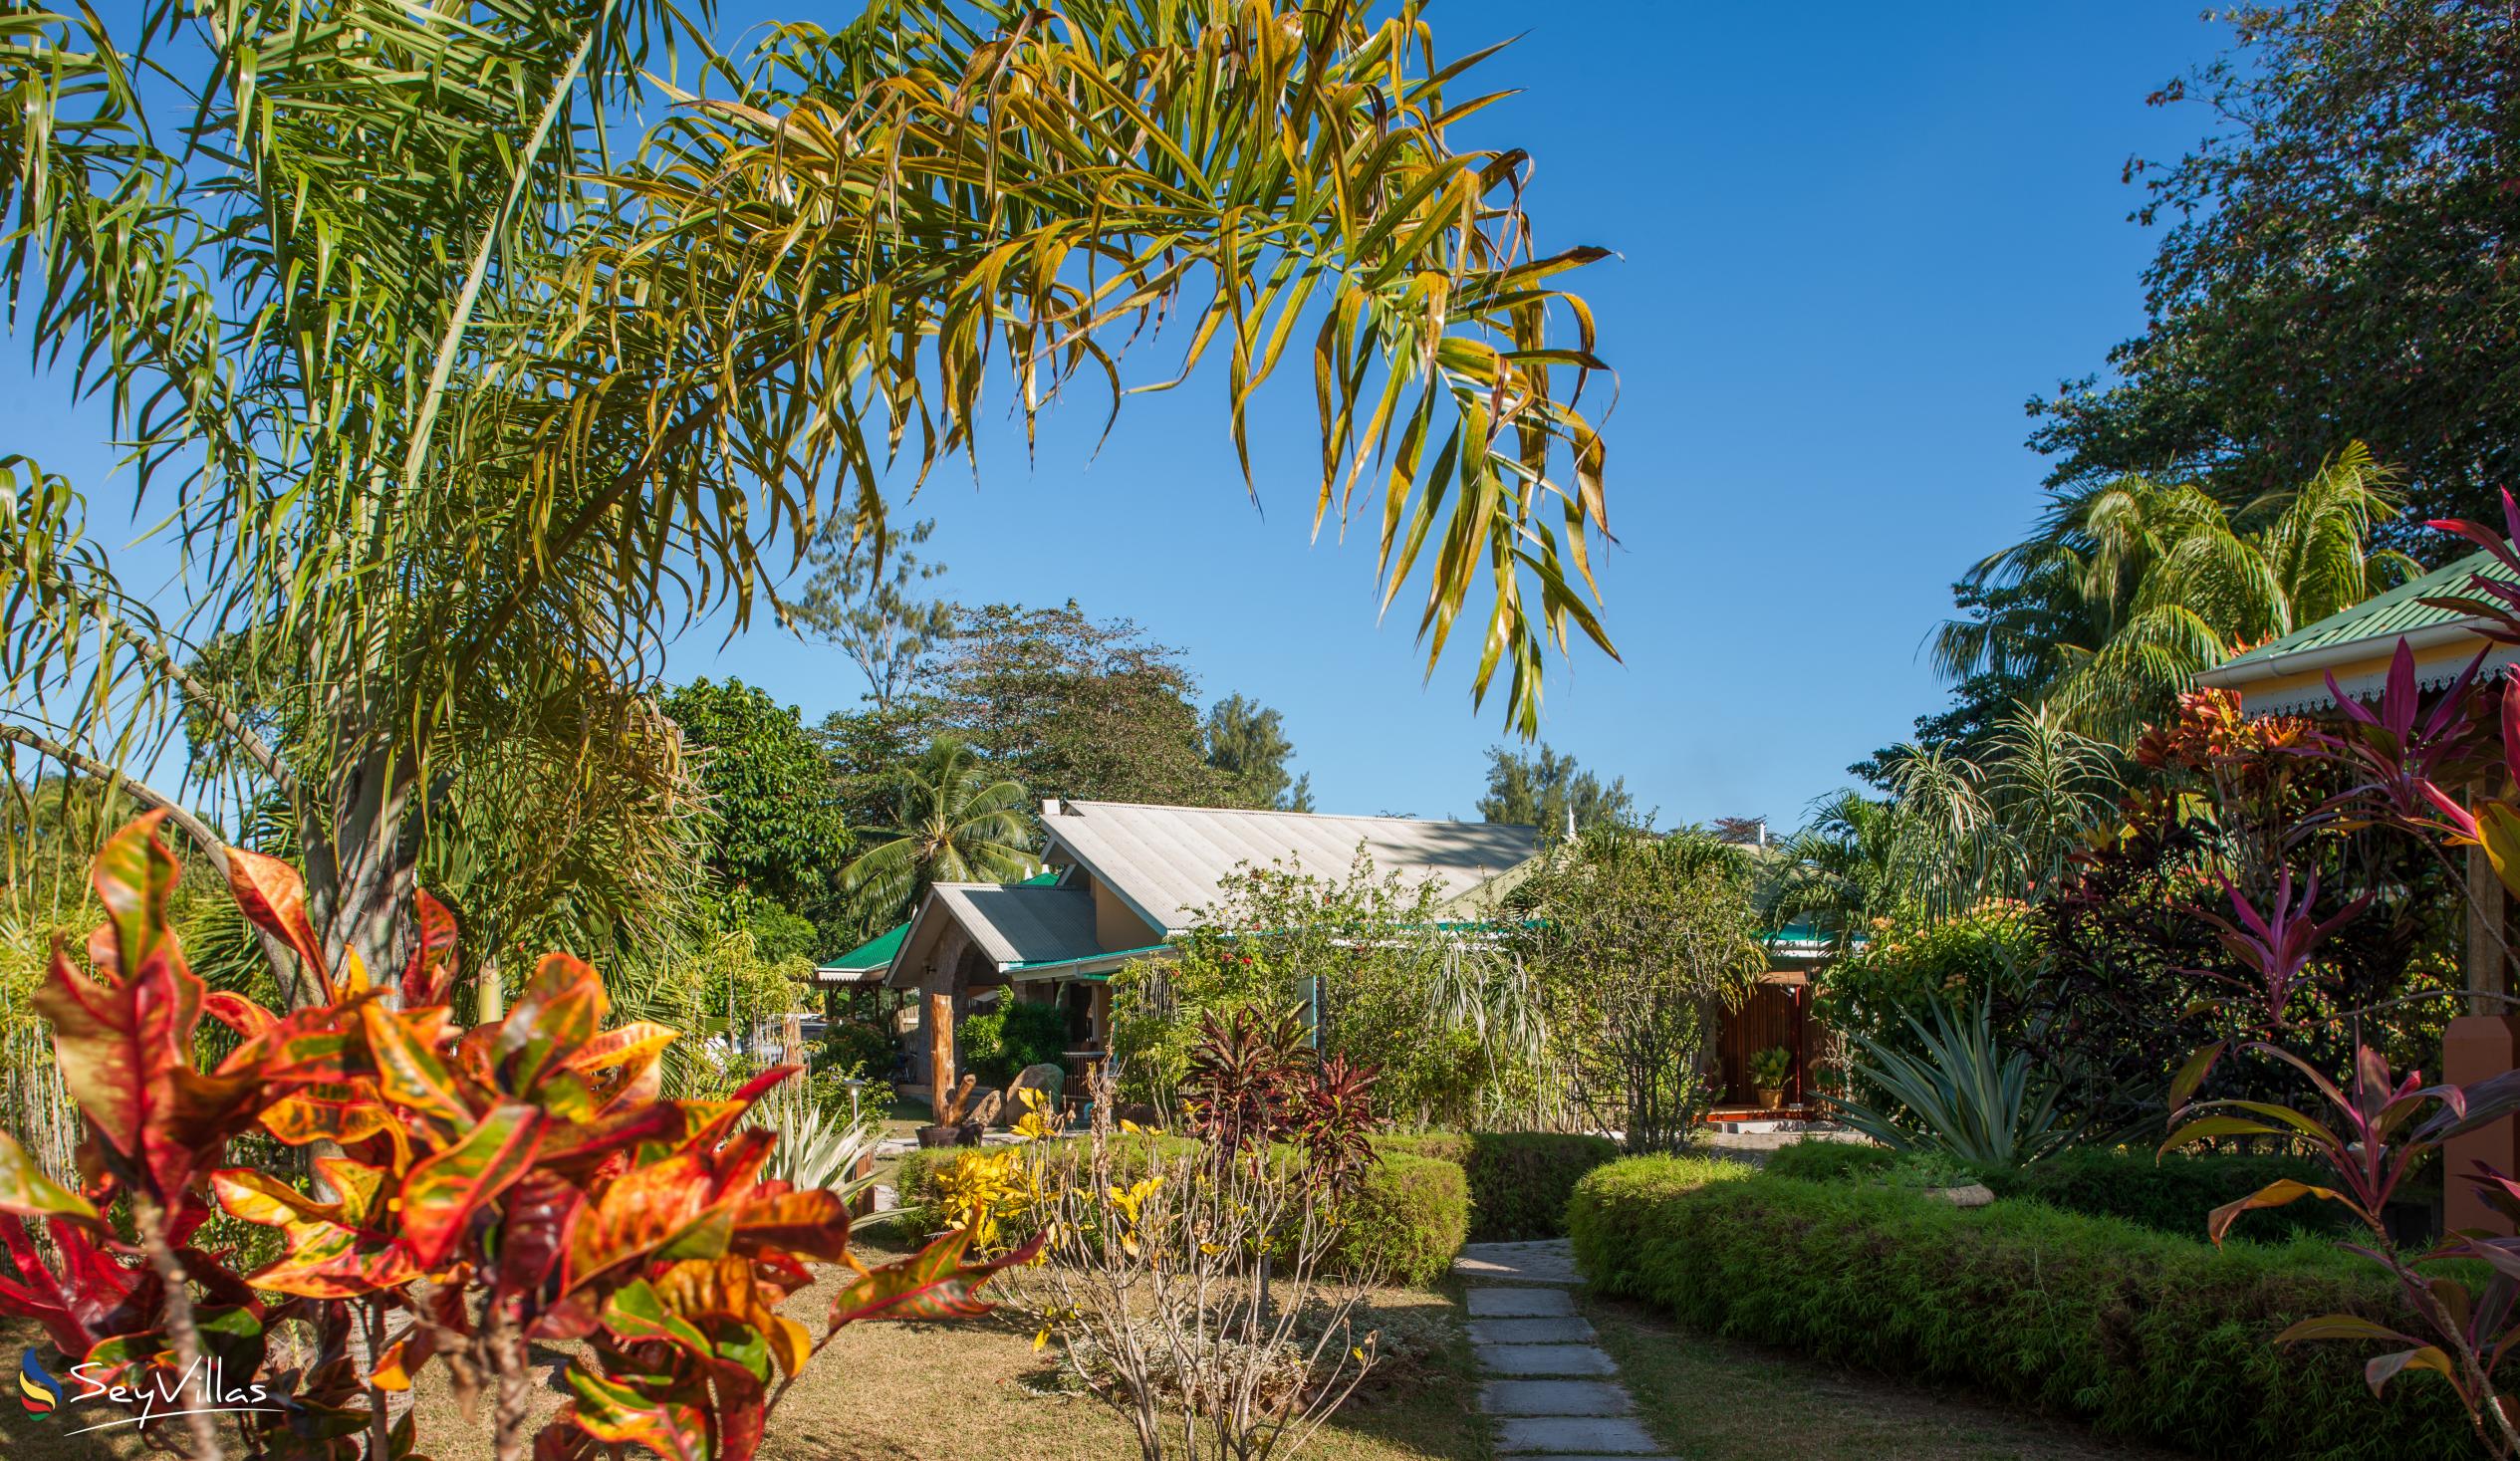 Foto 90: Casa de Leela - Aussenbereich - La Digue (Seychellen)